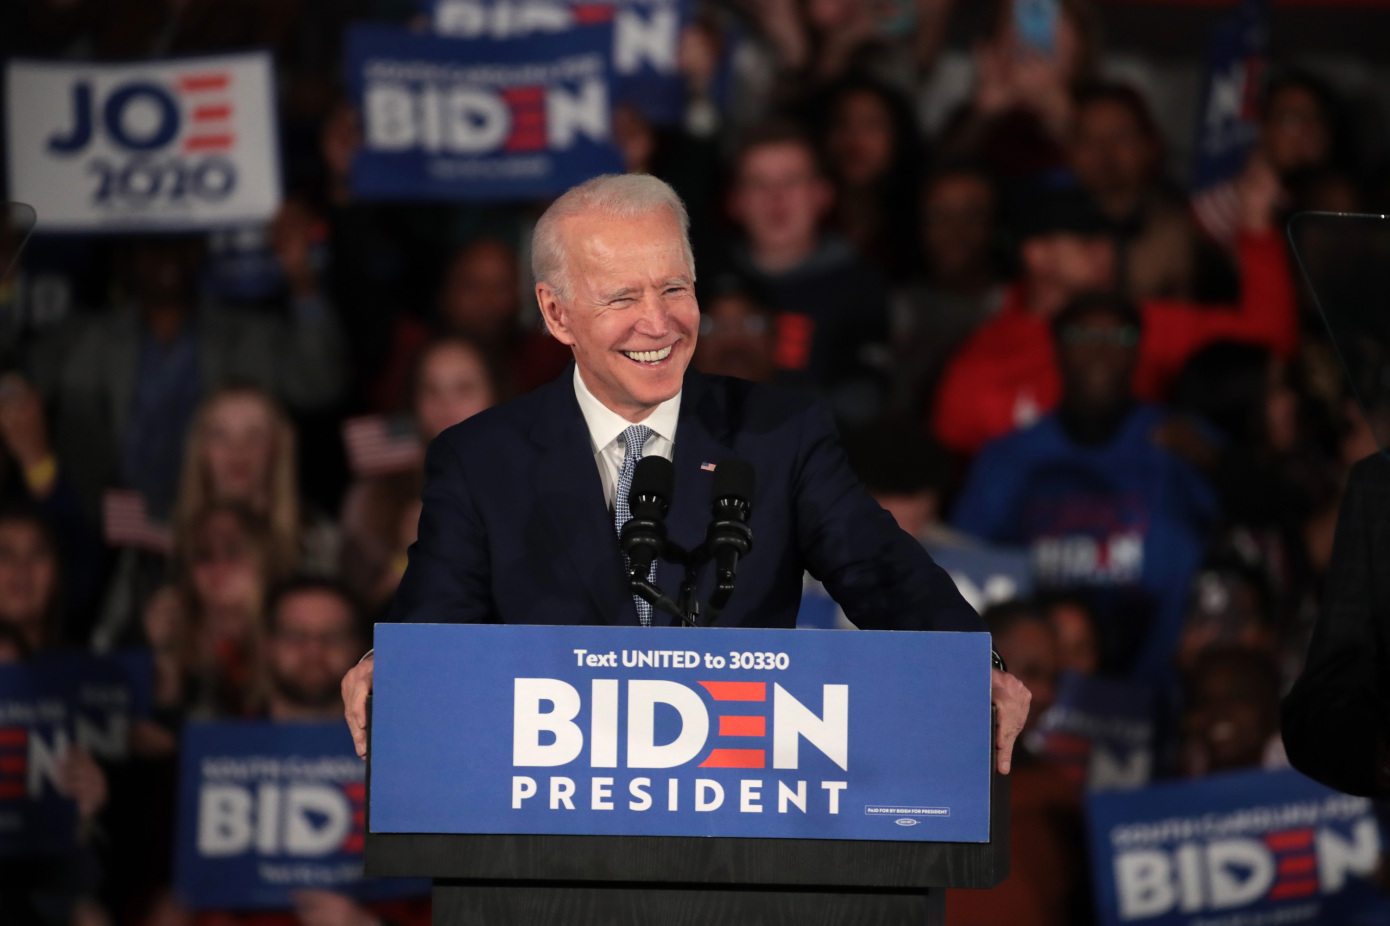 Biden’s infrastructure plans could boost startups